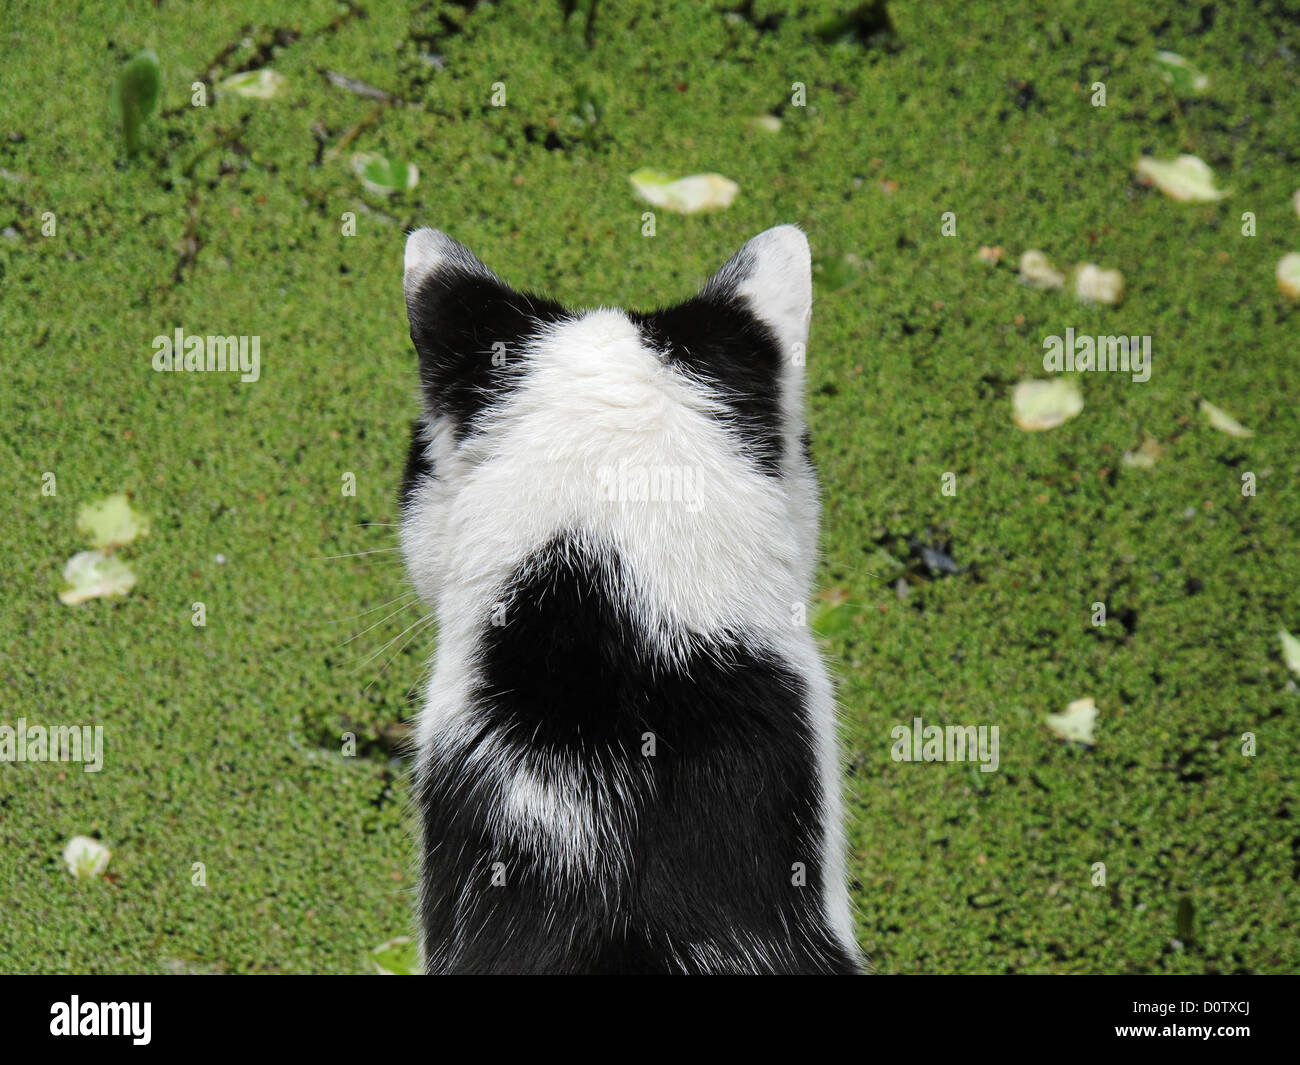 Animal, cat, house cat, back, behind, lurk, black, pond, water lenses, white, ears, Stock Photo